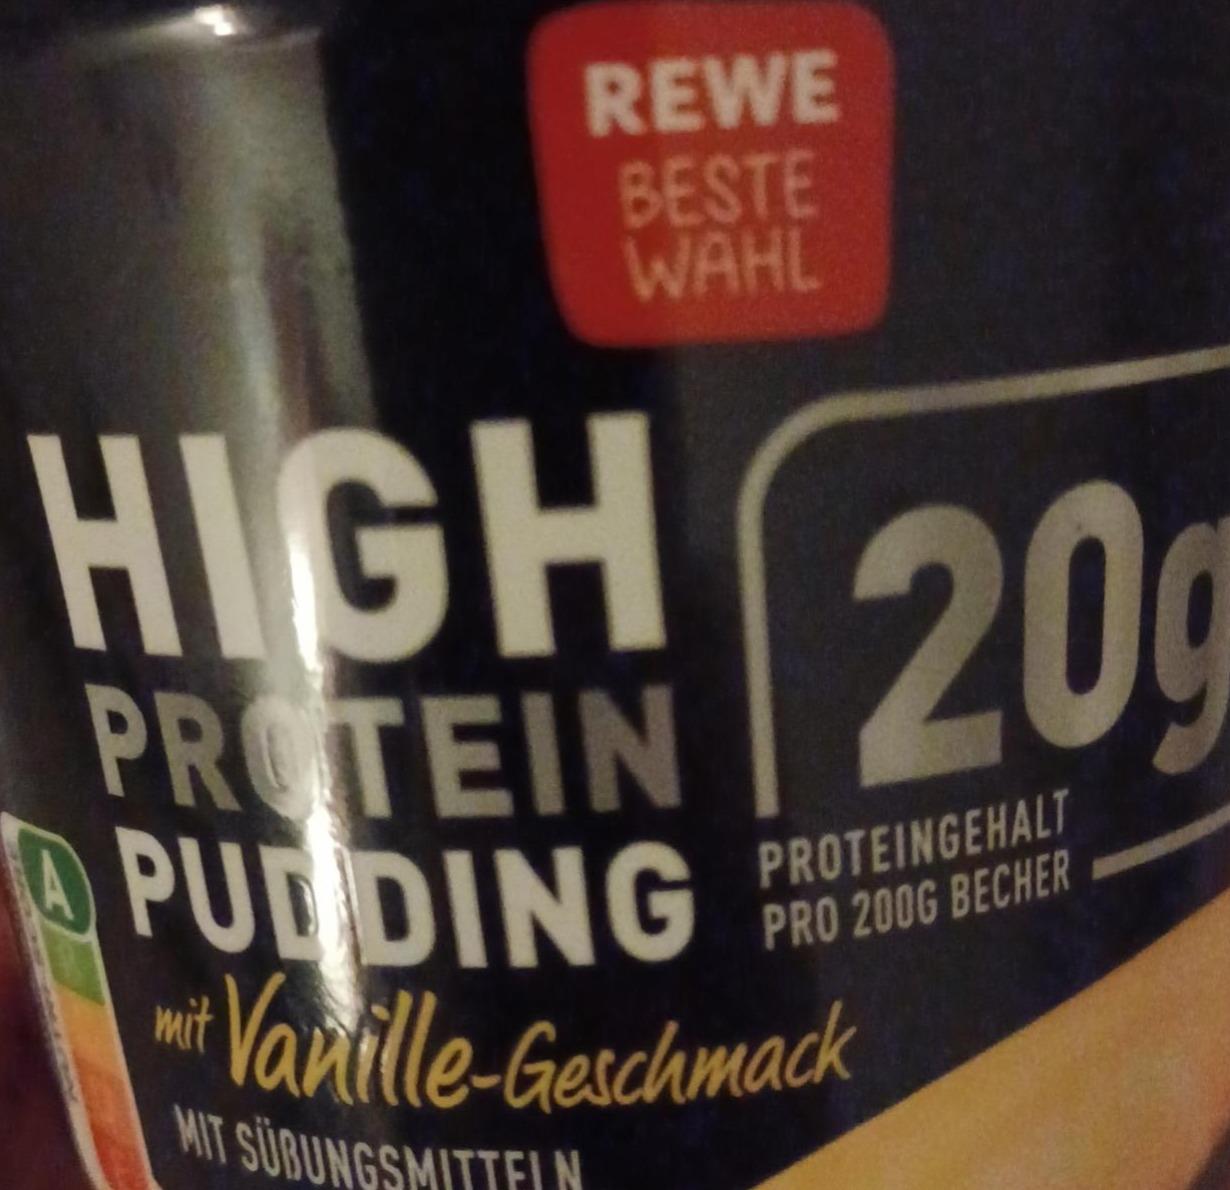 Фото - Високобілковий пудинг High Protein Pudding Rewe beste wahl